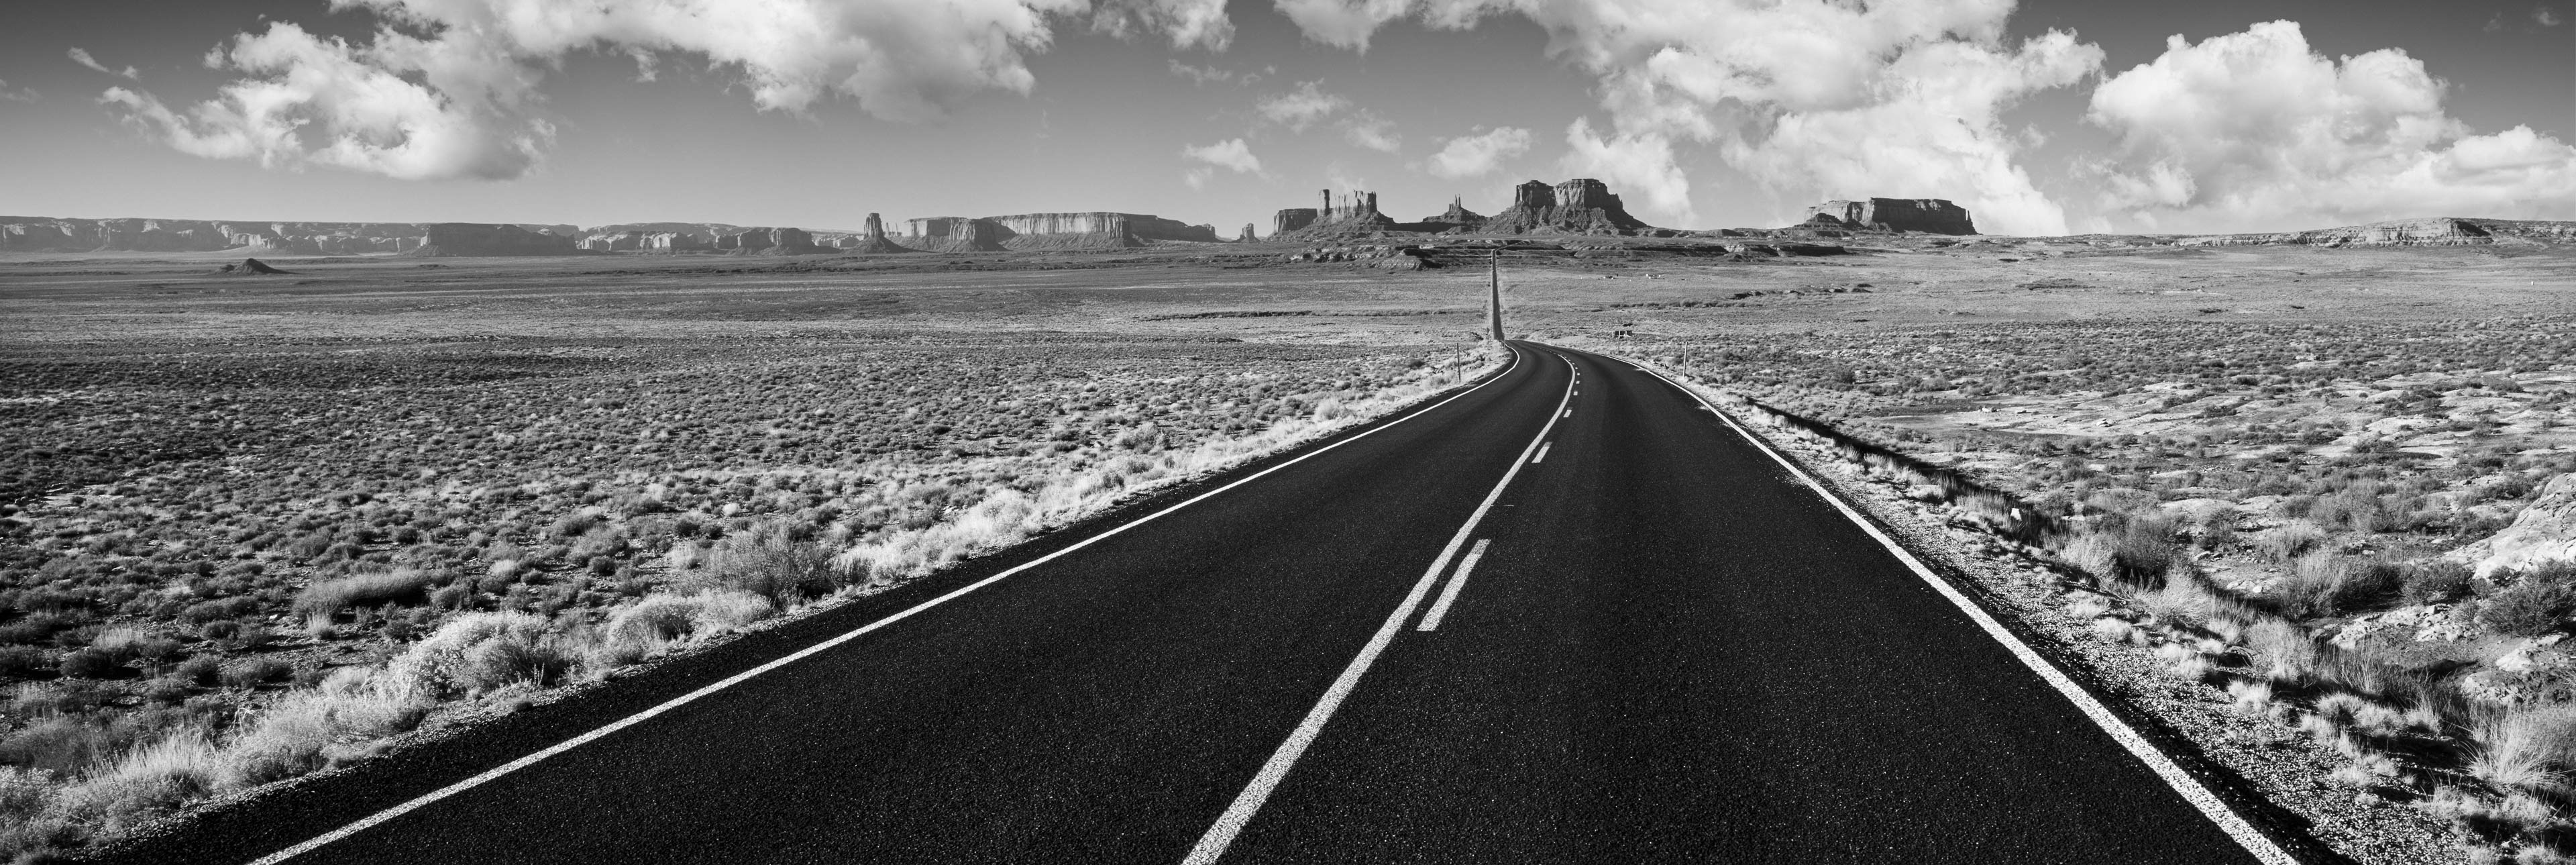 Road, Monument Valley Navajo Tribal Park, USA